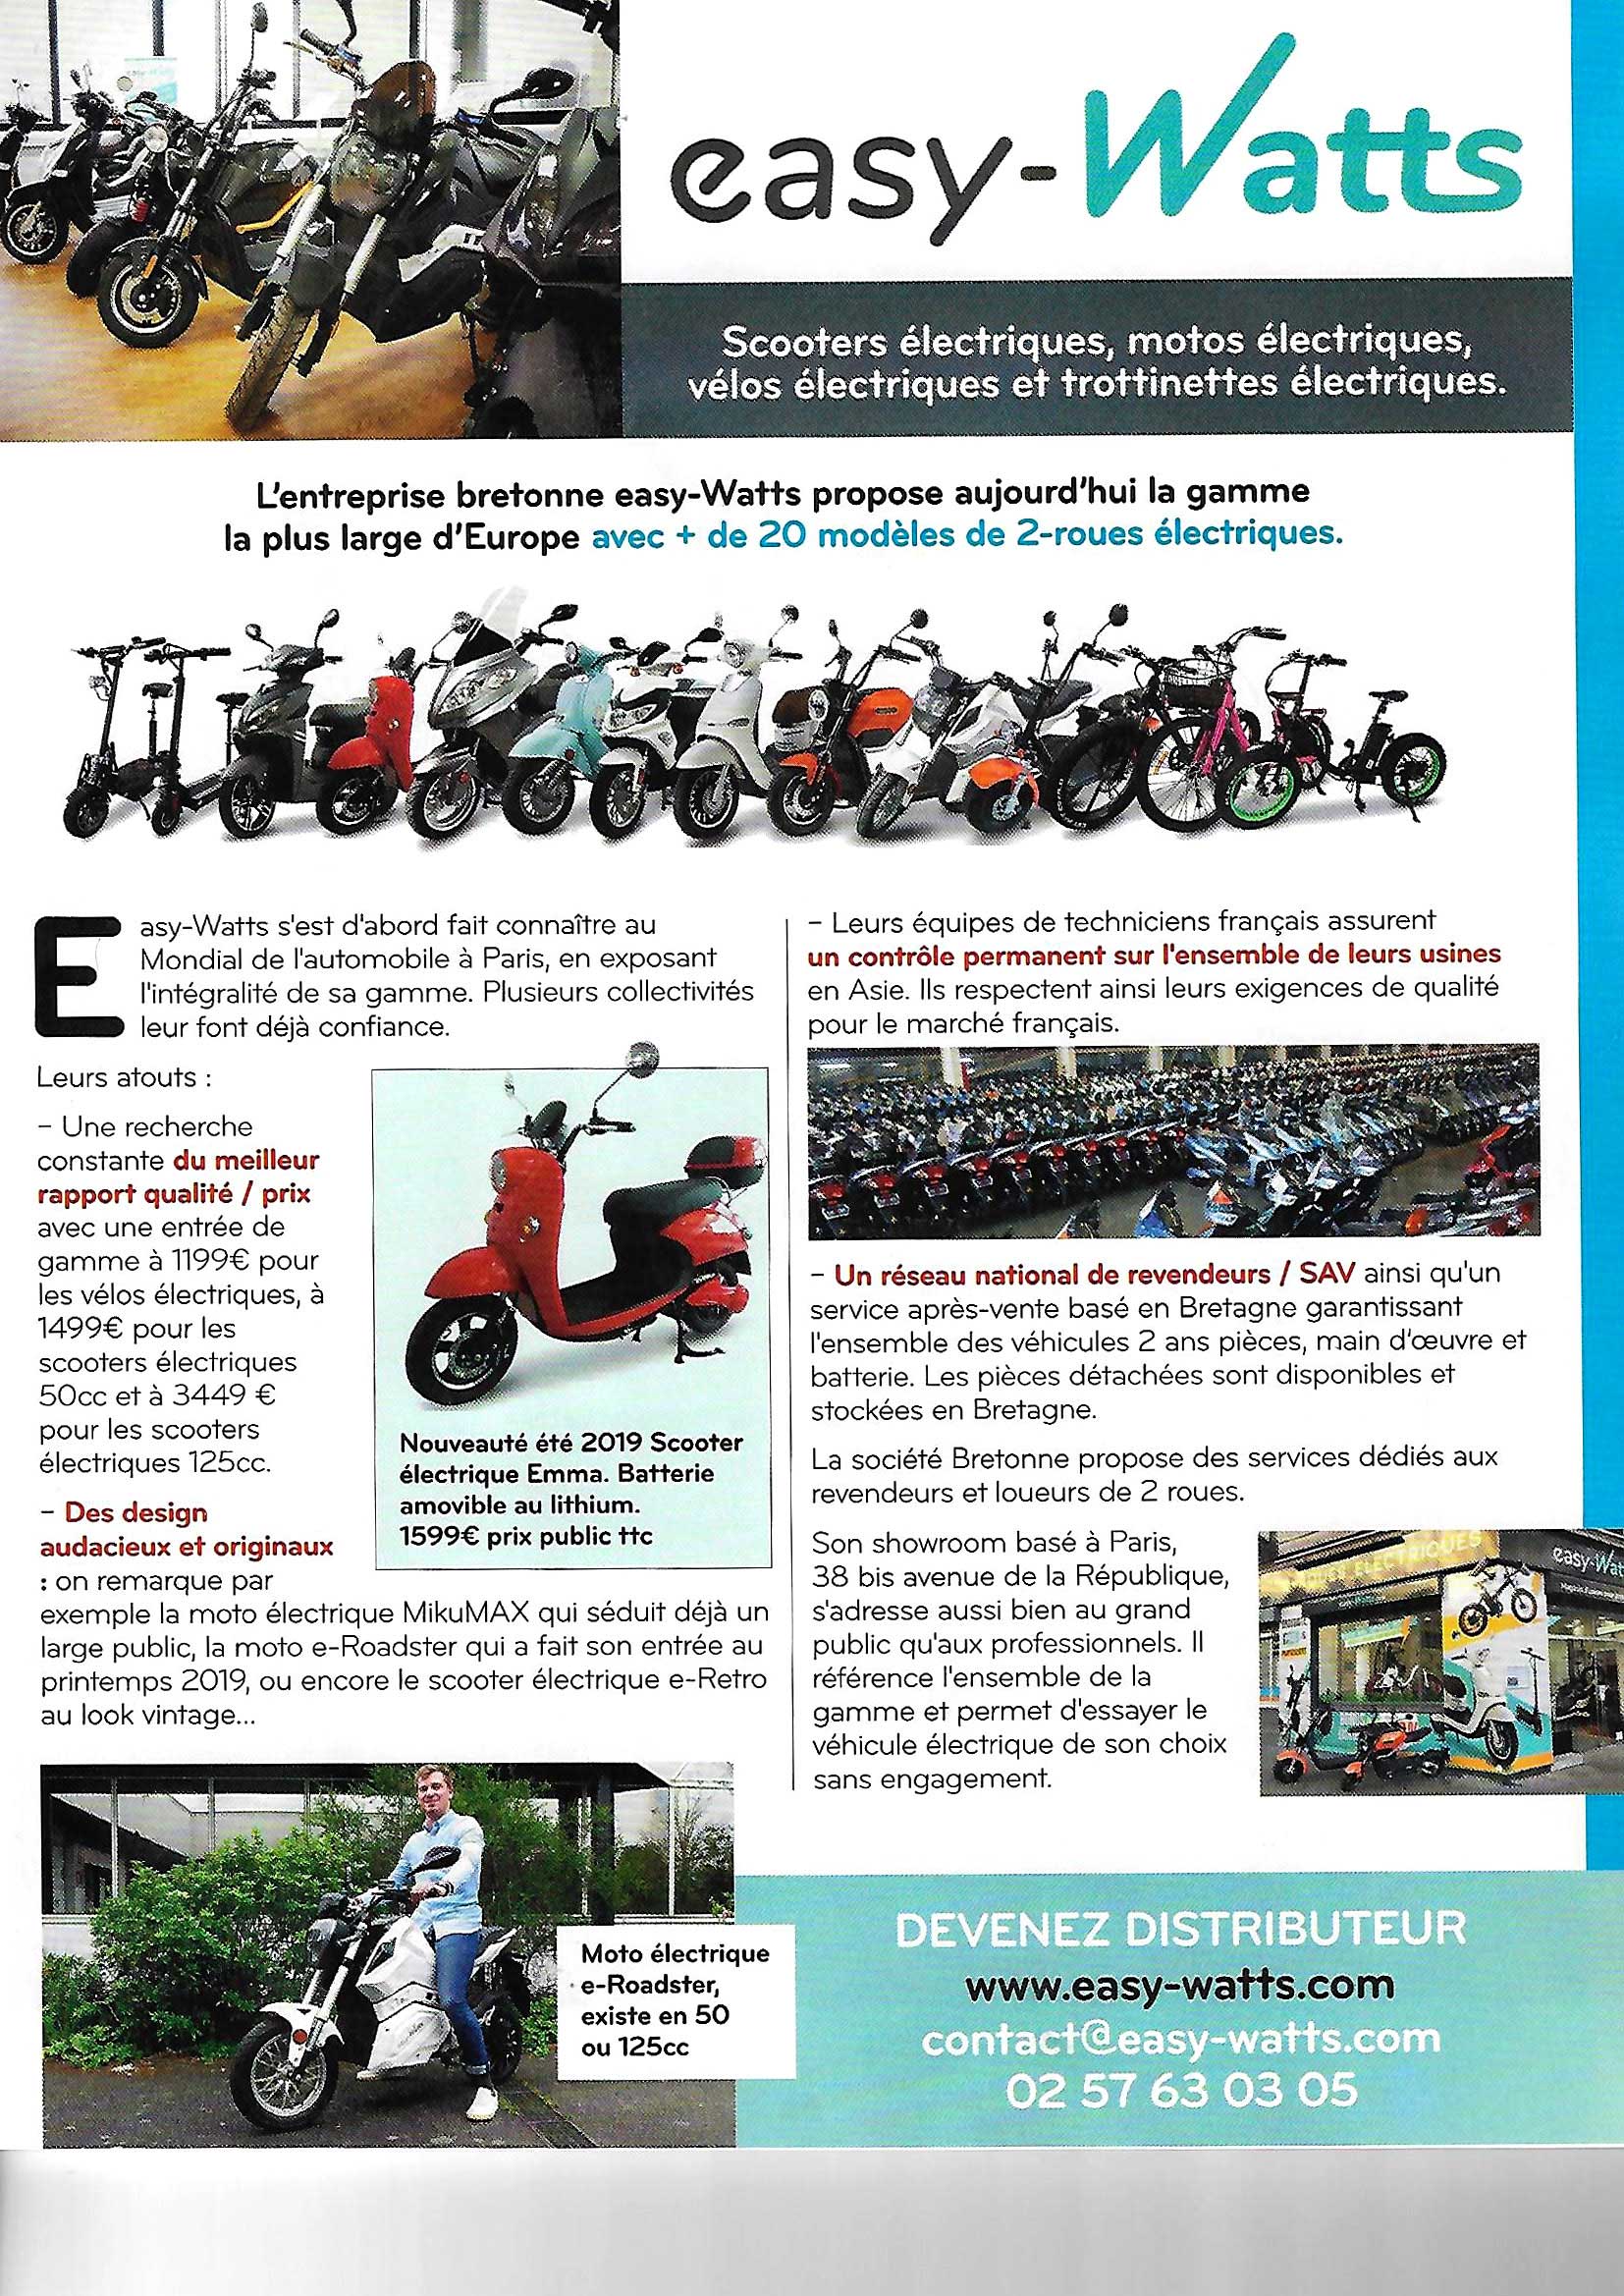 Batterie scooter - Actualités Scooter par Scooter Mag